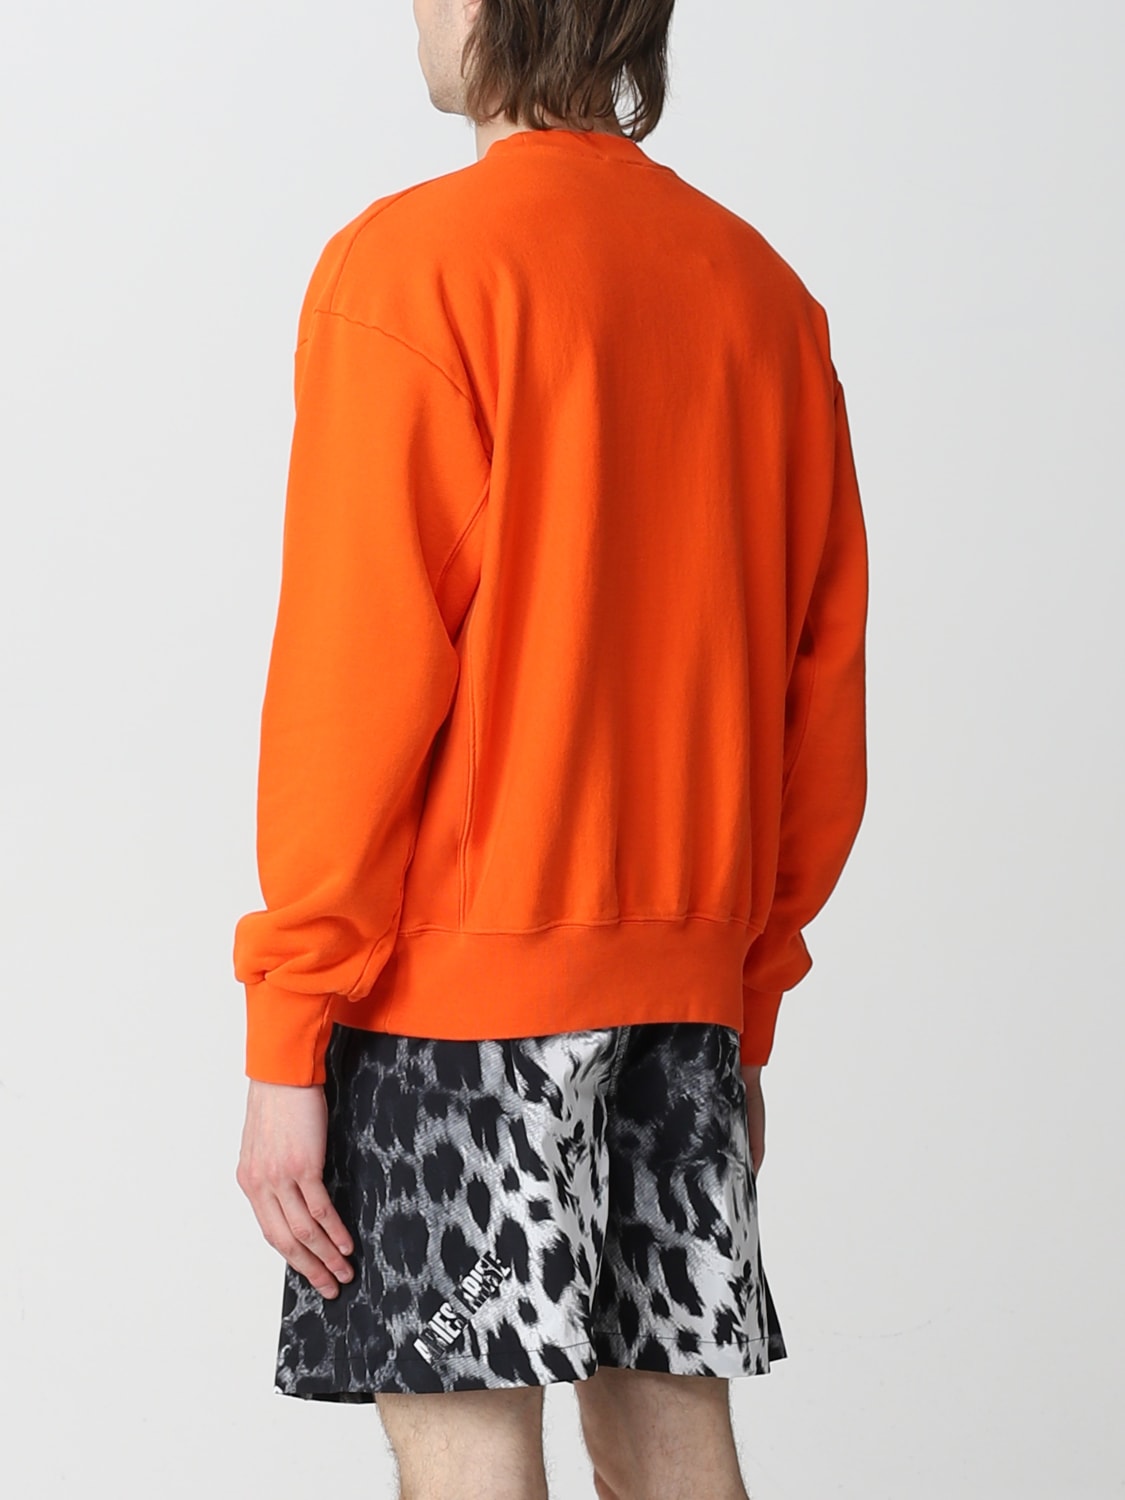 Sweatshirt Aries: Aries sweatshirt for men orange 2